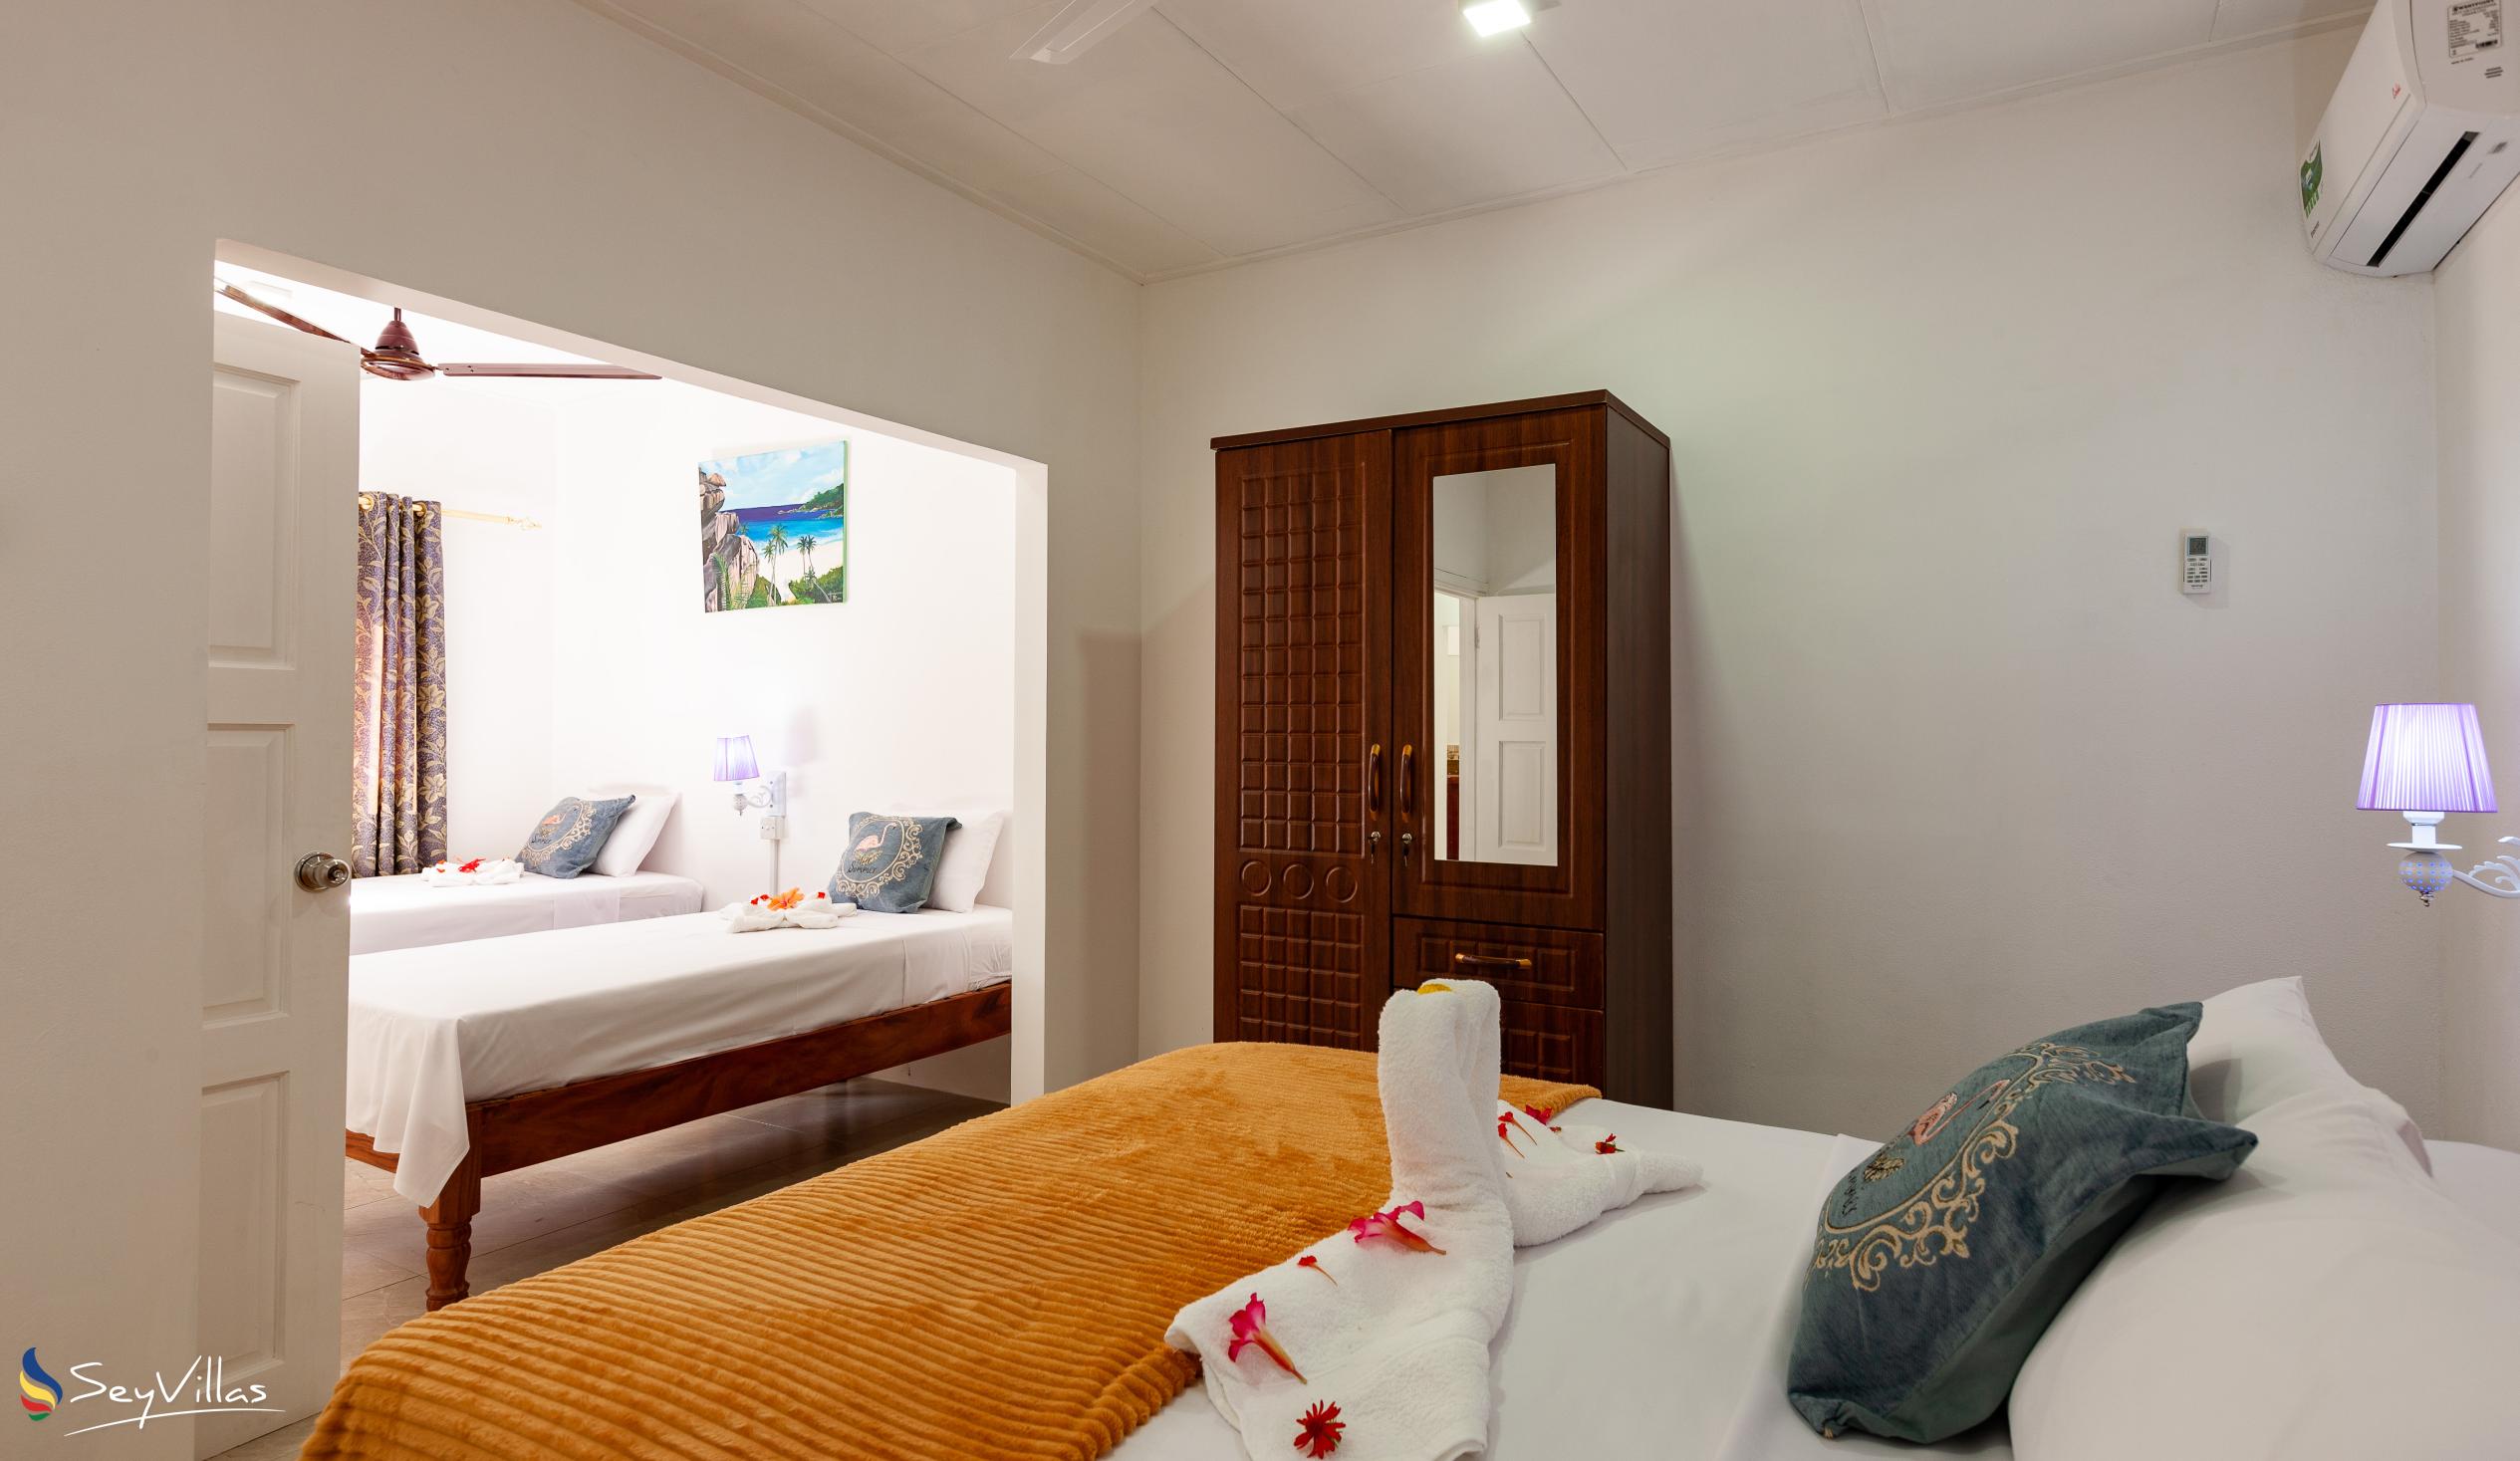 Foto 53: Anse Grosse Roche Beach Villa - Familienappartement mit 2 Schlafzimmern - La Digue (Seychellen)